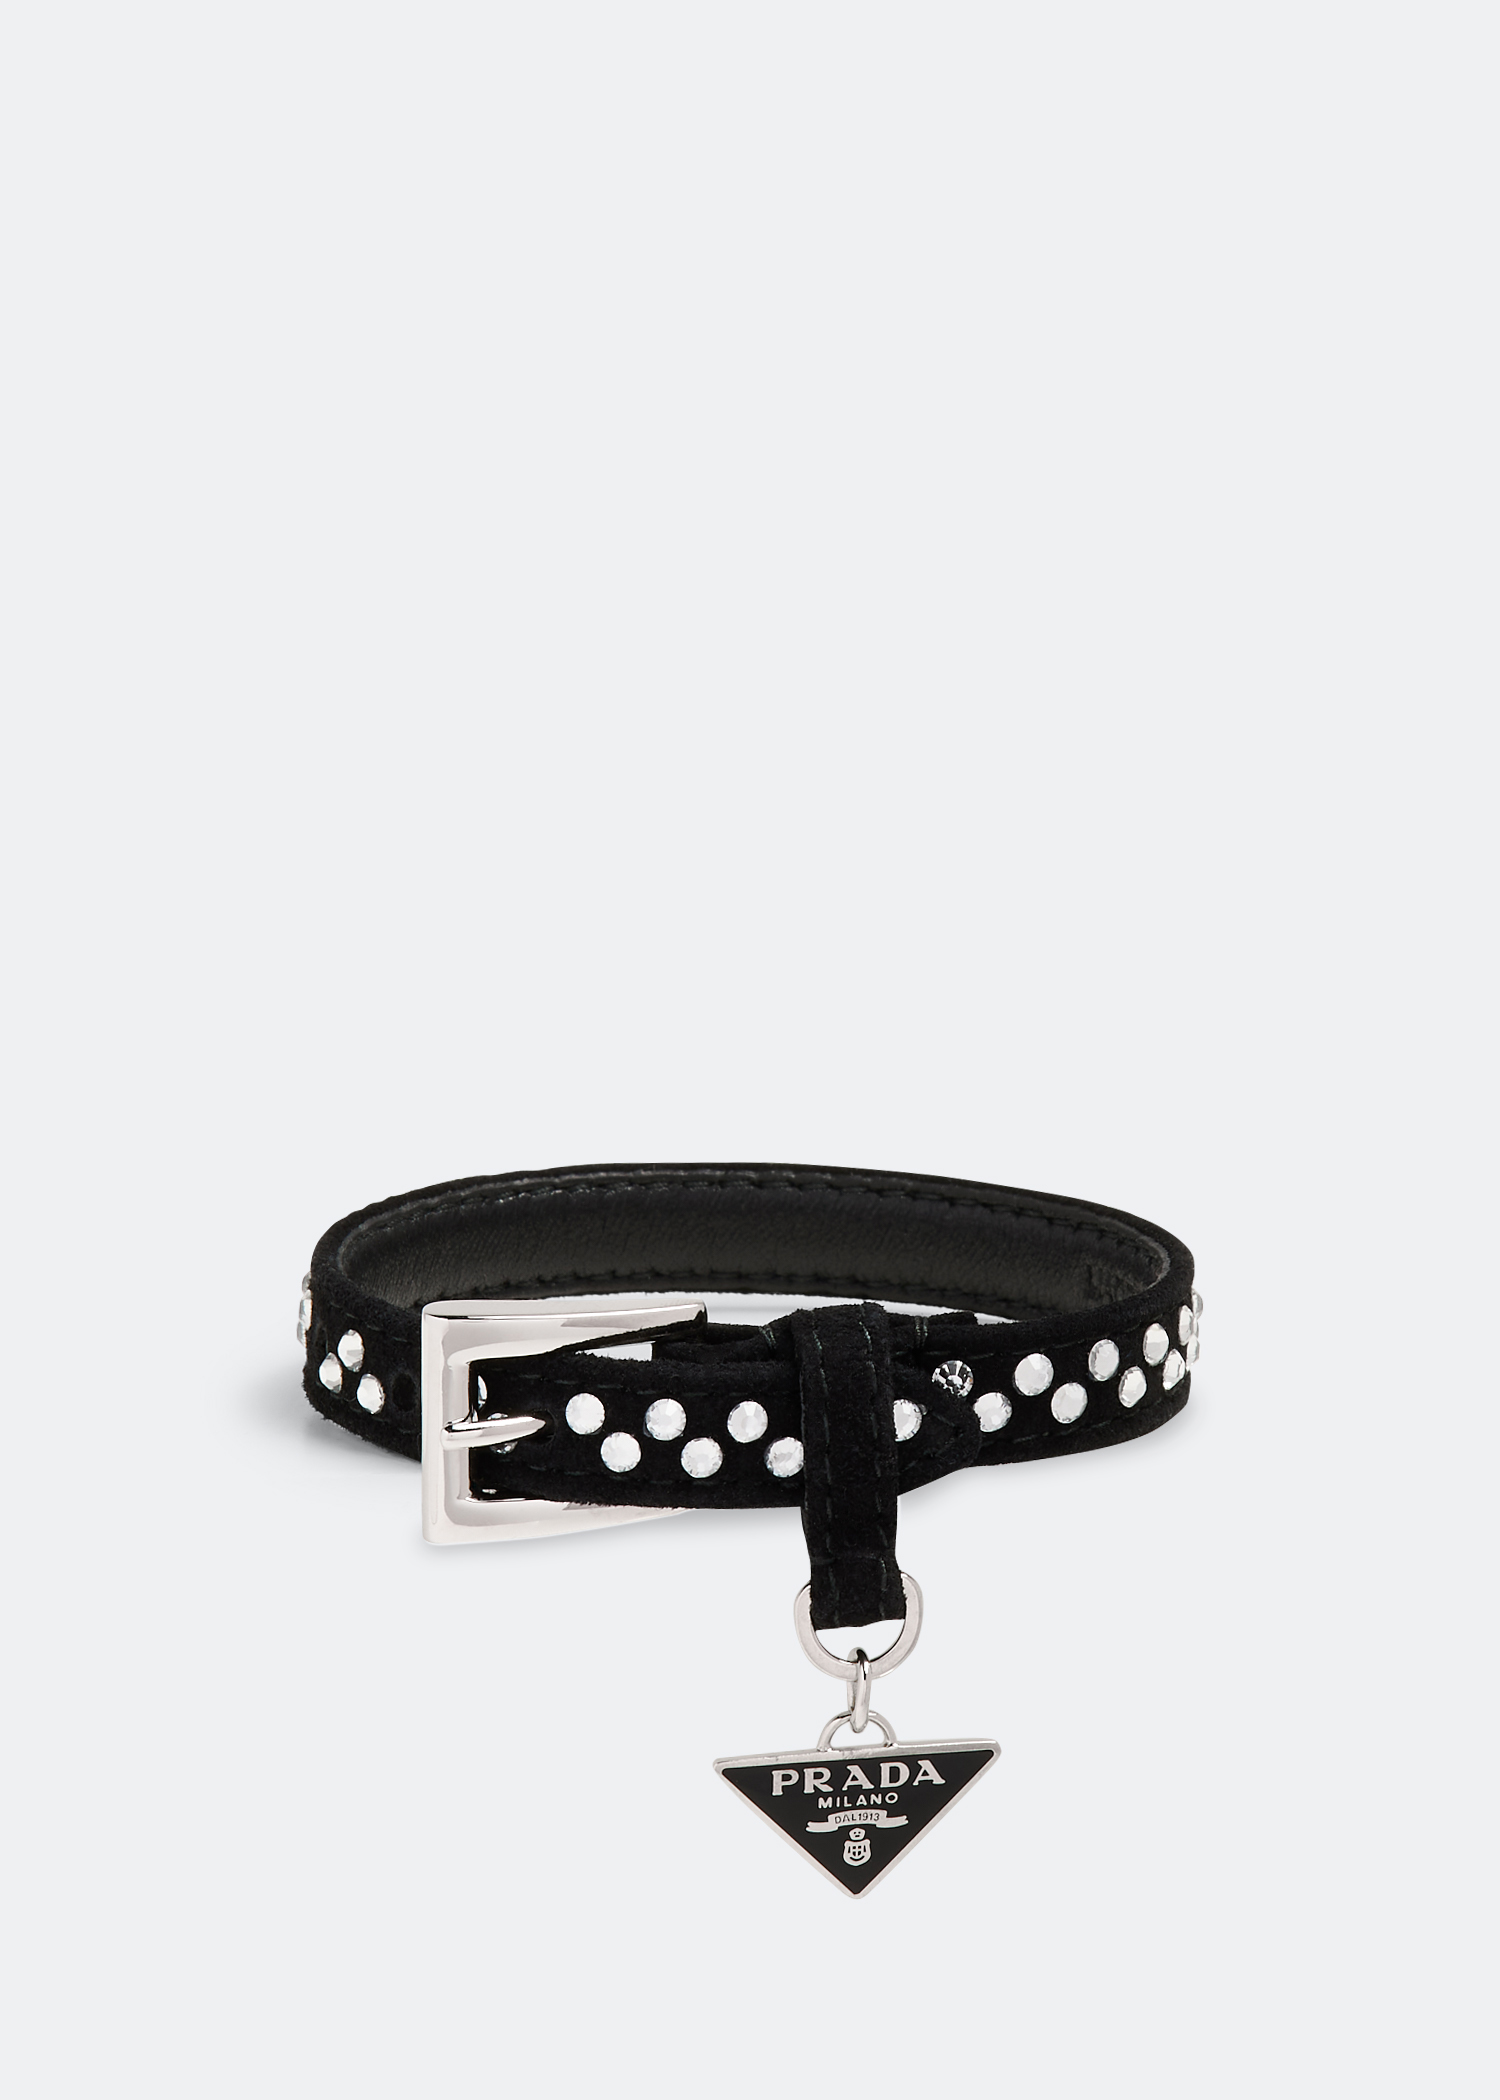 PRADA Women's Bracelet/Wristband Leather in Blue | REBELLE